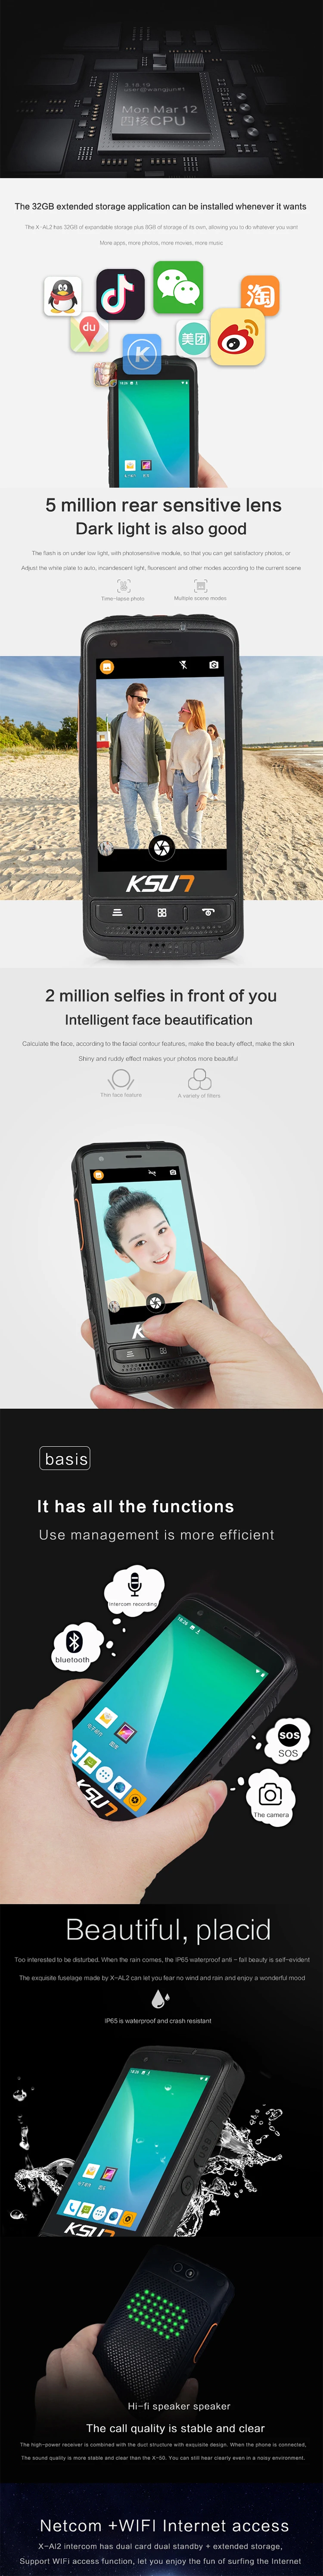 Android SIM Card Mobile Phone Wifi Poc Talki Walki Unlimited Distance KSXAL2 4G LTE Radio GPS Portable Zello Walkie Talkie